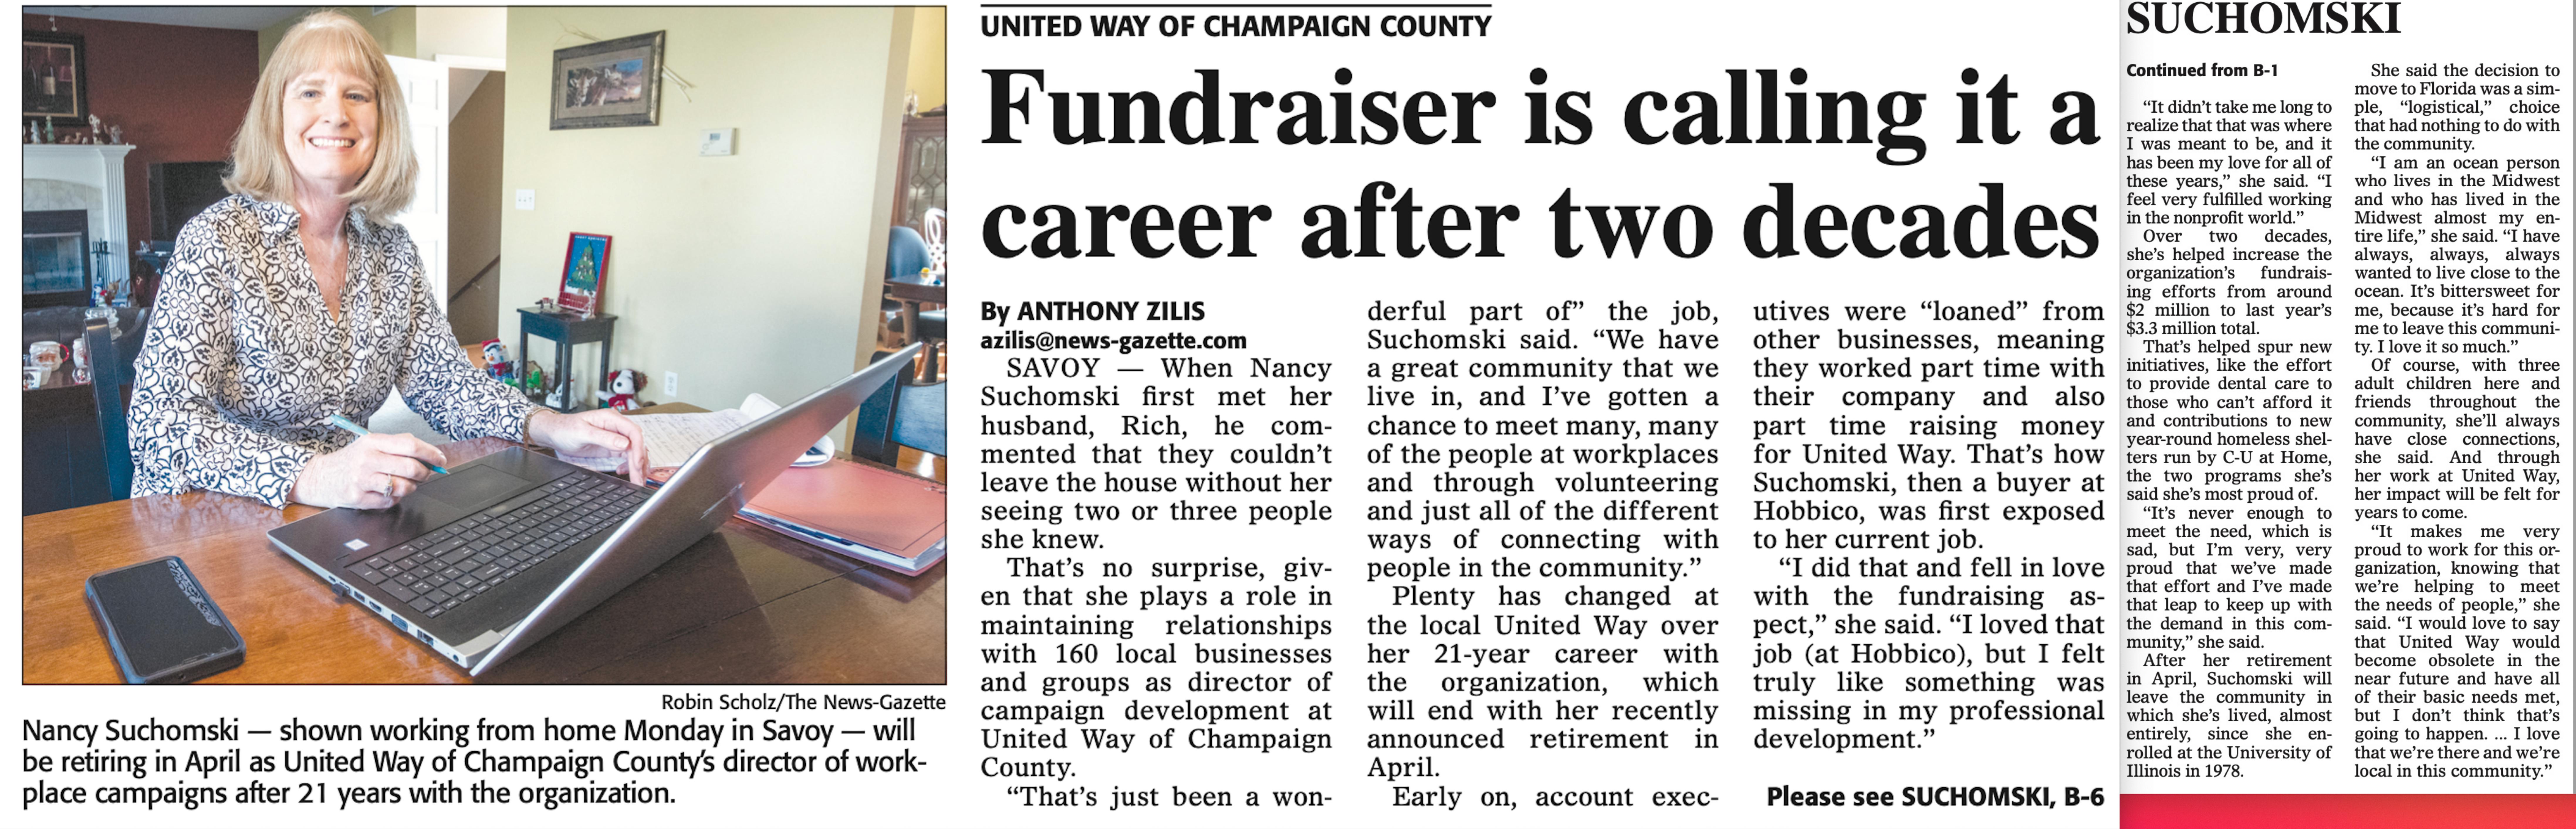 Copy of News Gazette Article describing Nancy Suchomski's retirement. Full text below.